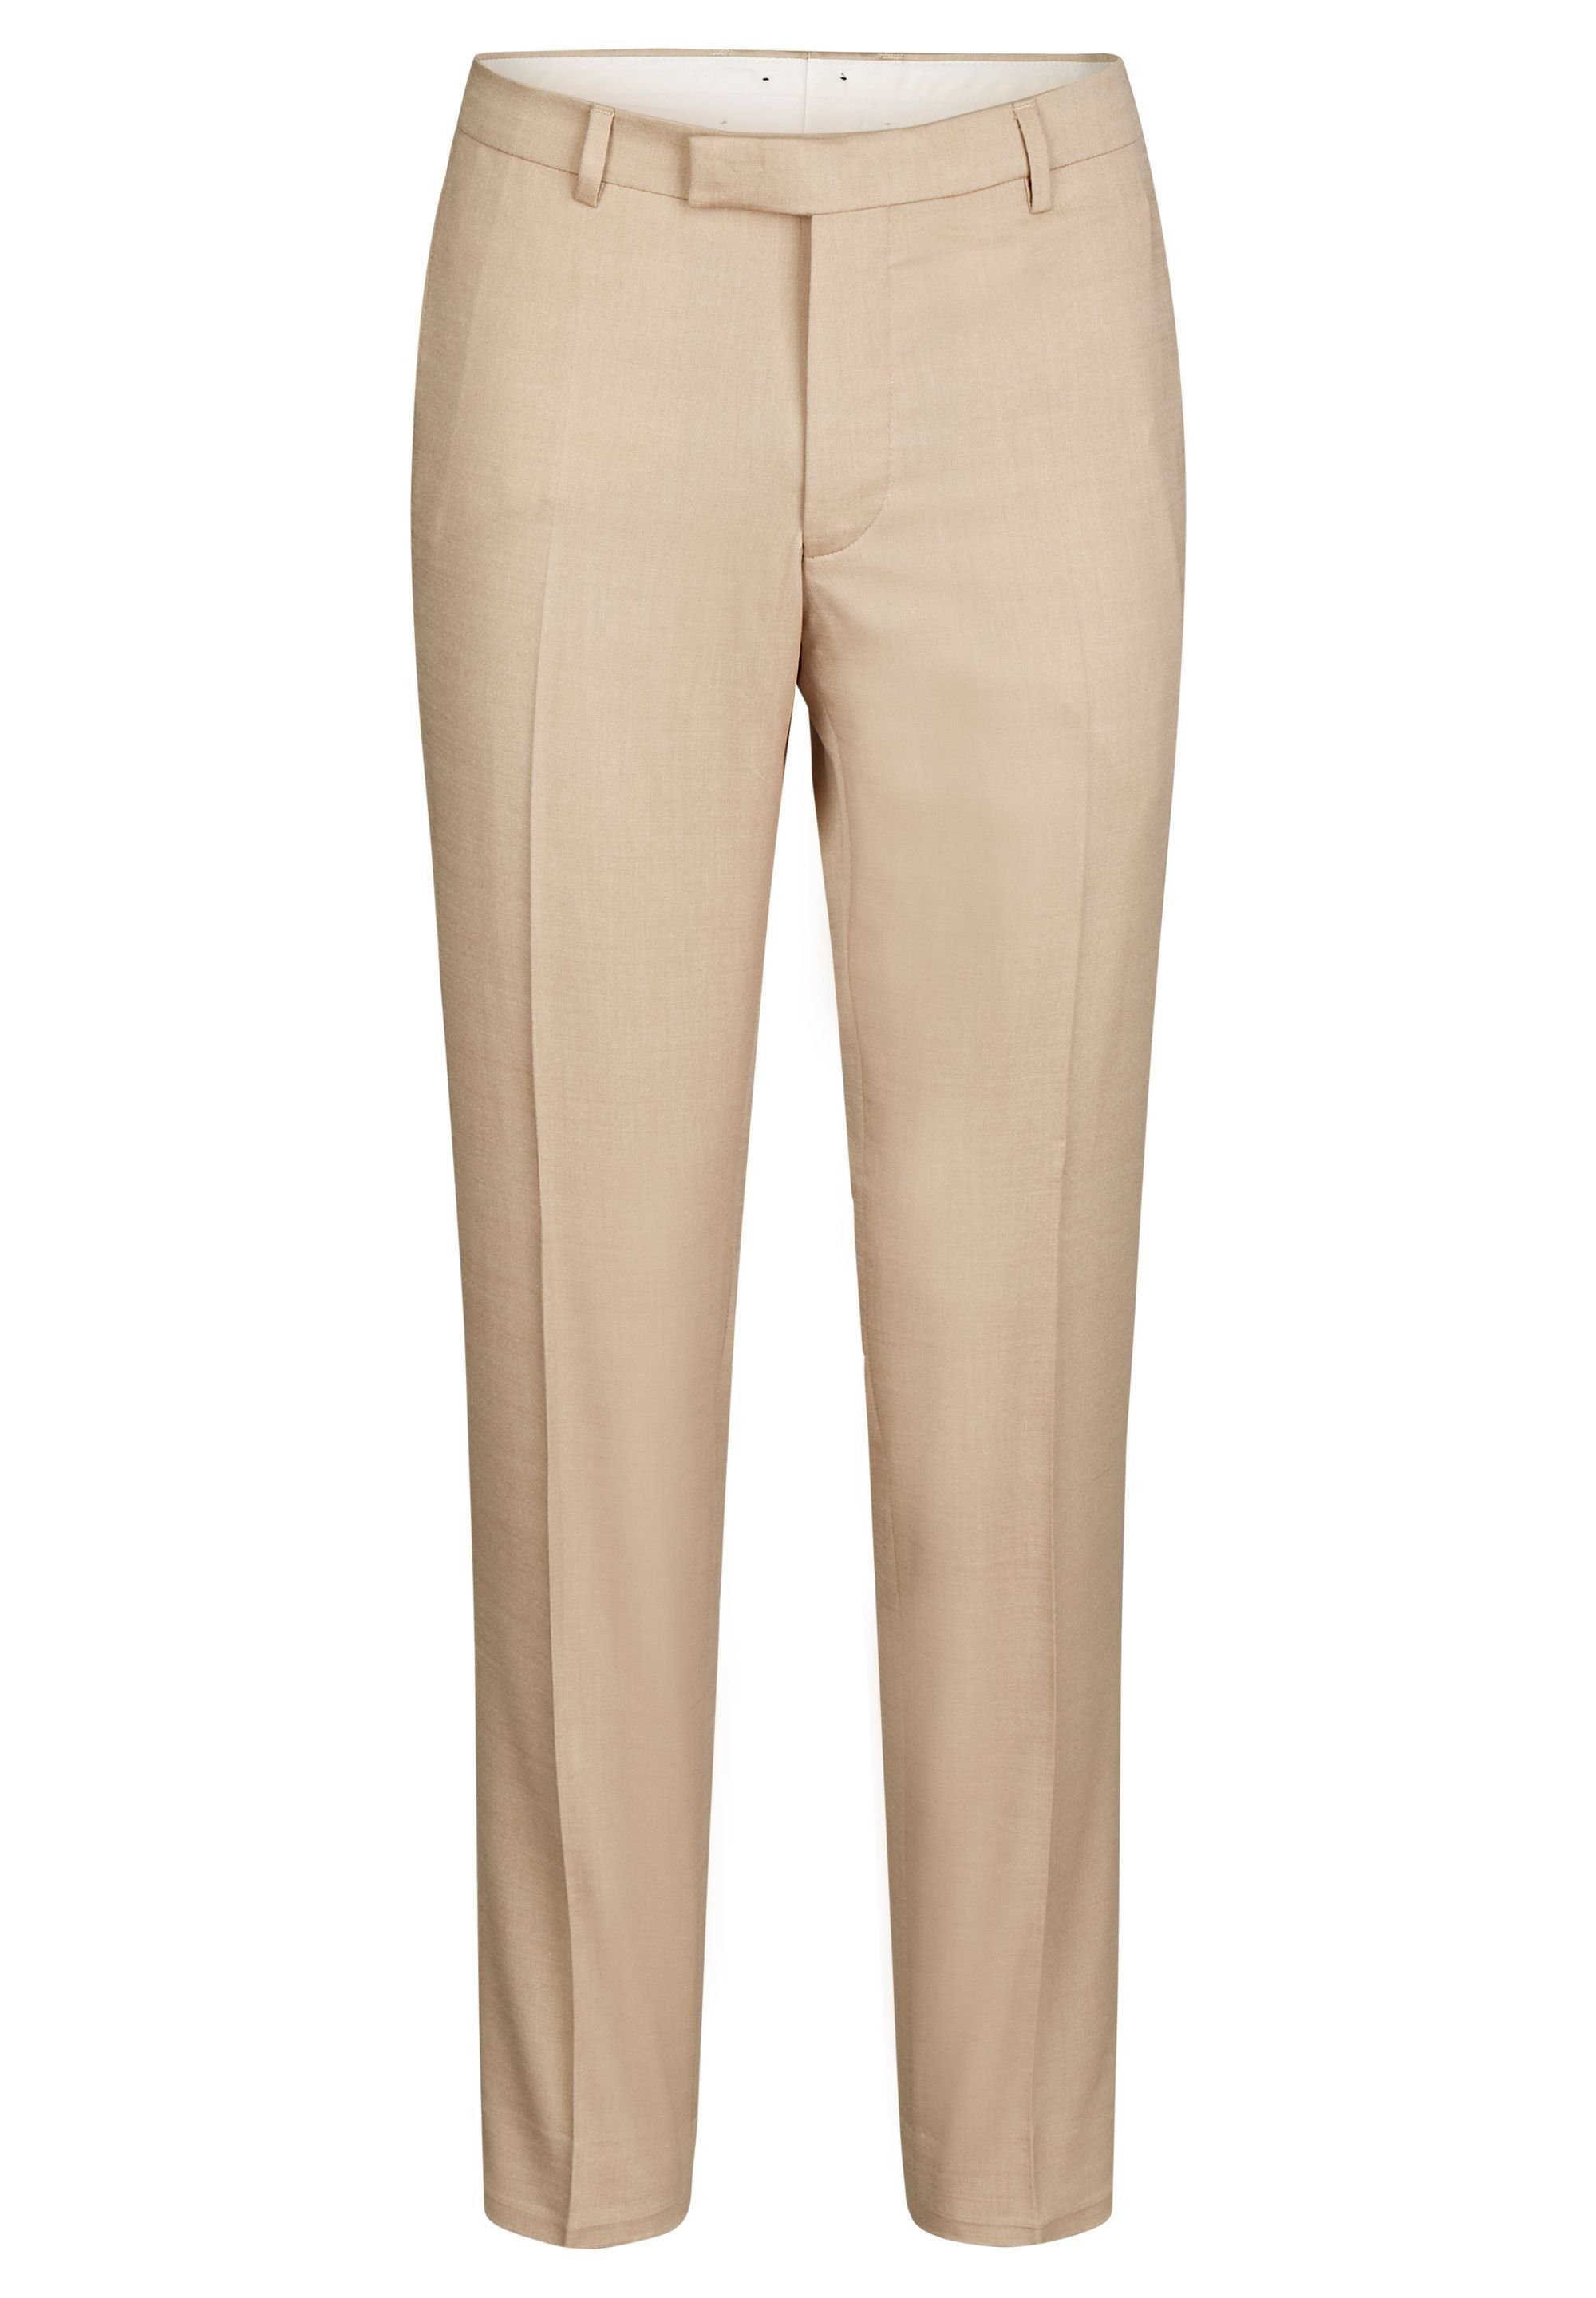 HECHTER PARIS Anzughose mit beige Pin-Ponit-Muster